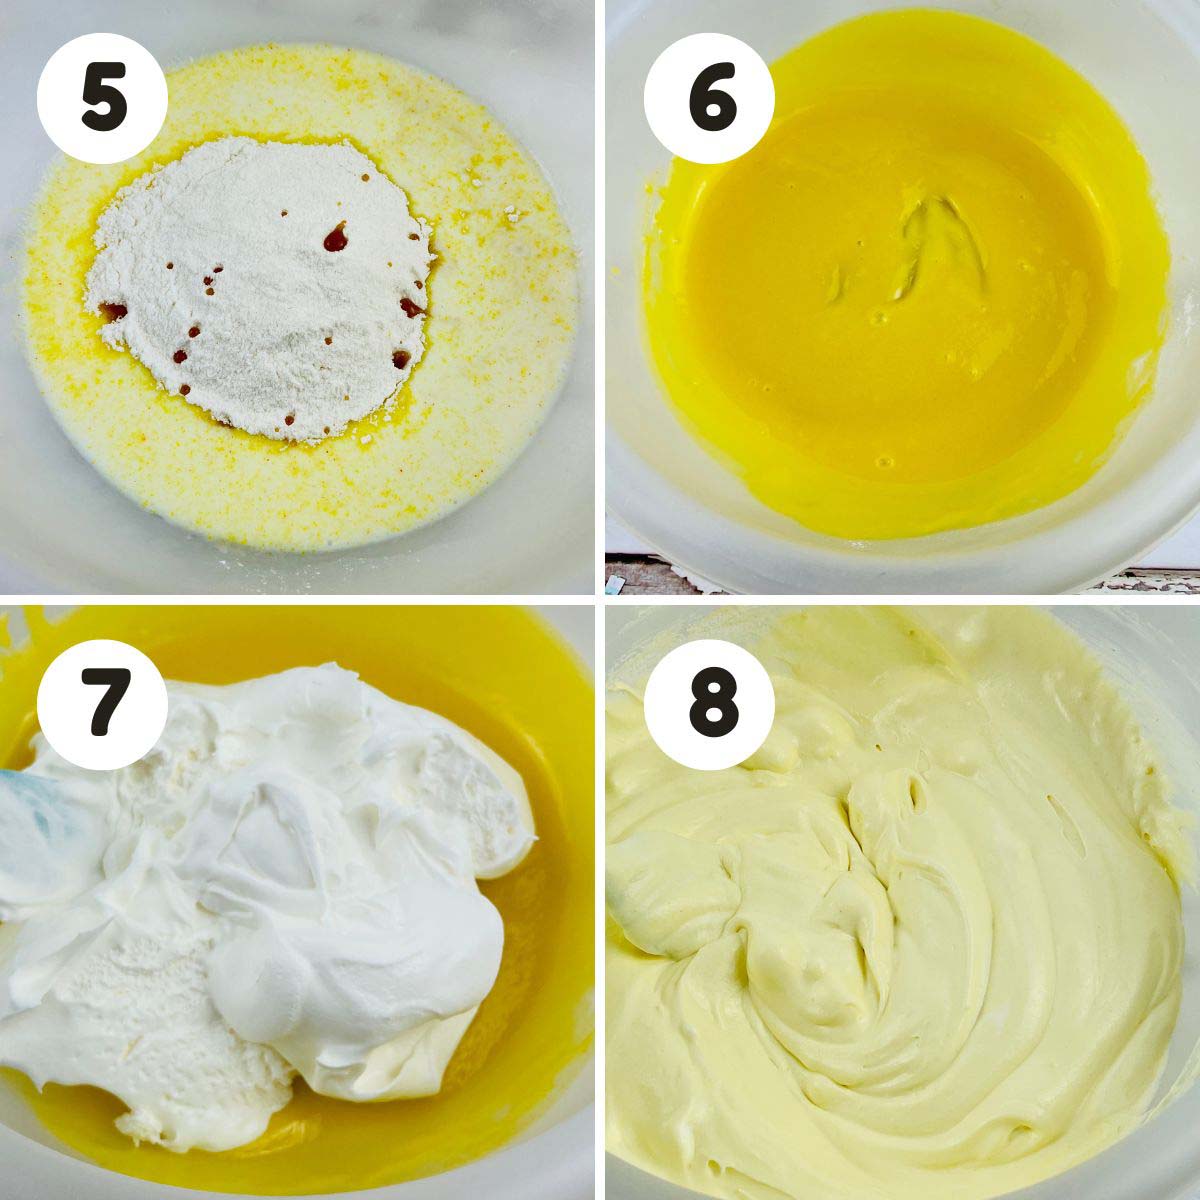 Steps to make the lemon frosting.